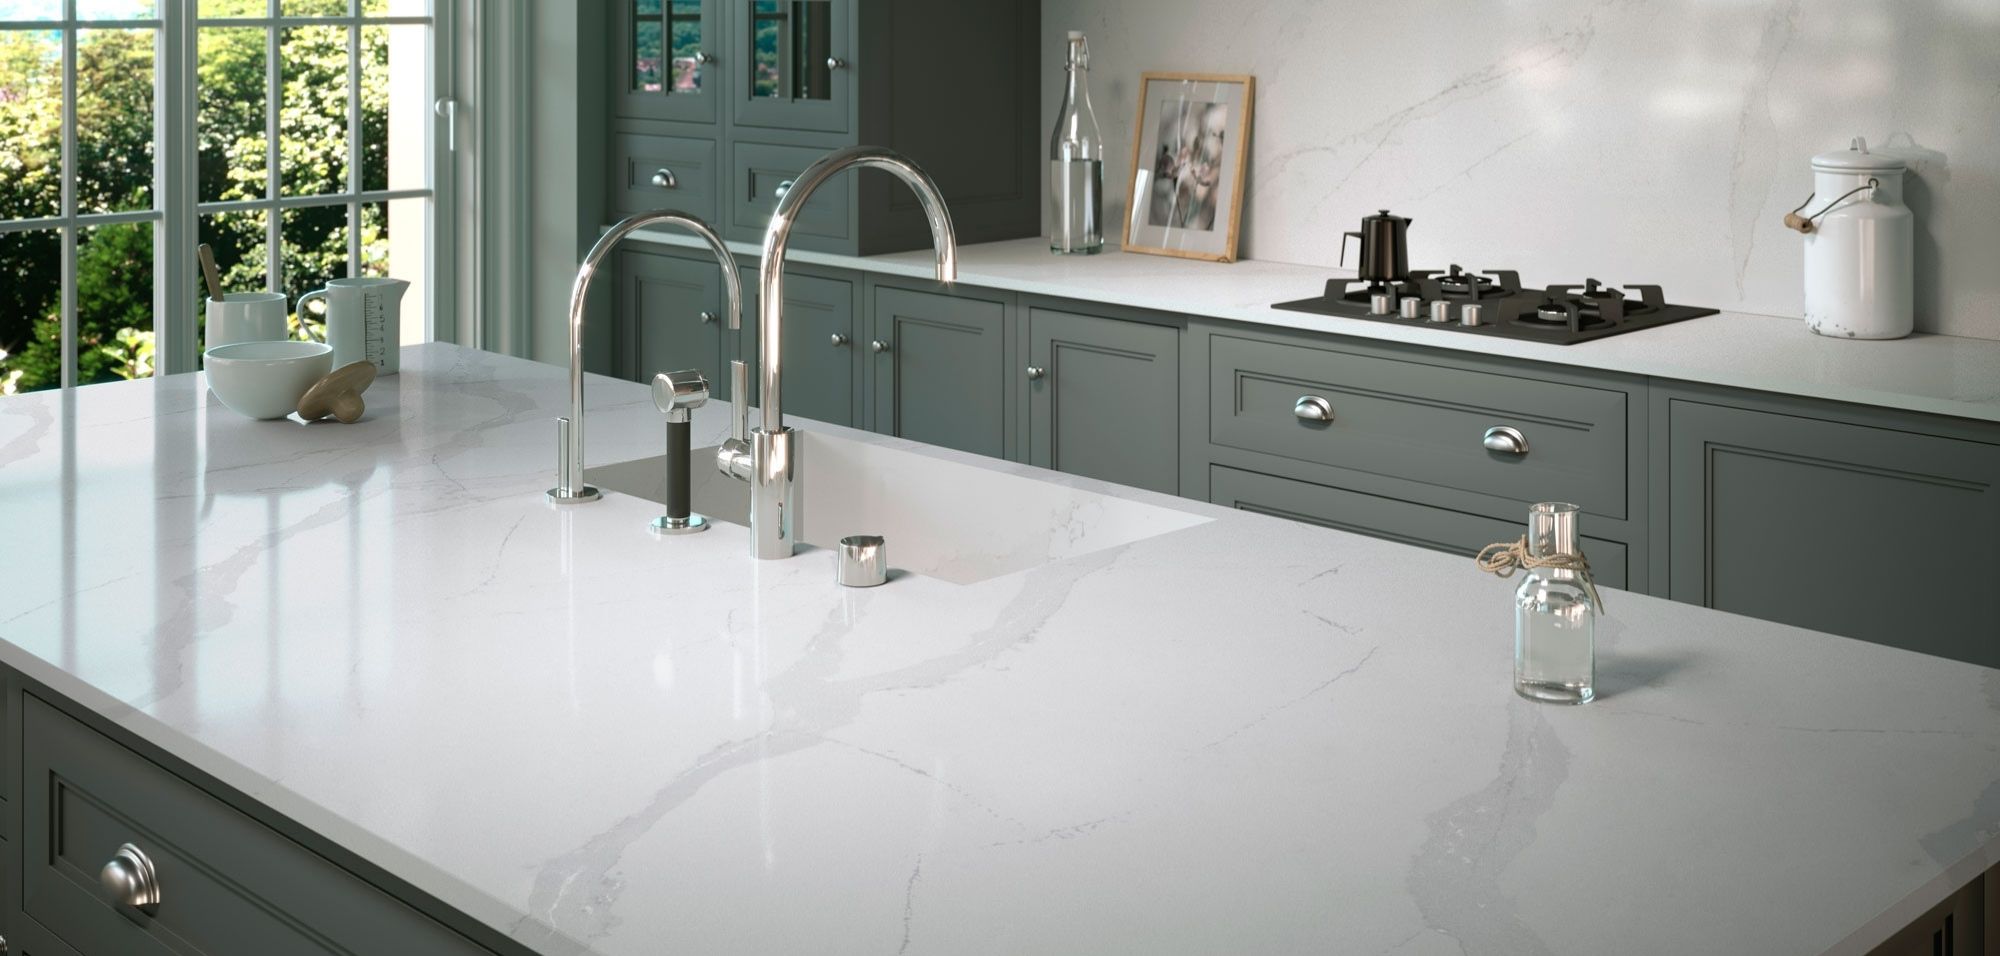 classic calacatta silestone quartz kitchen countertops with full height backsplash